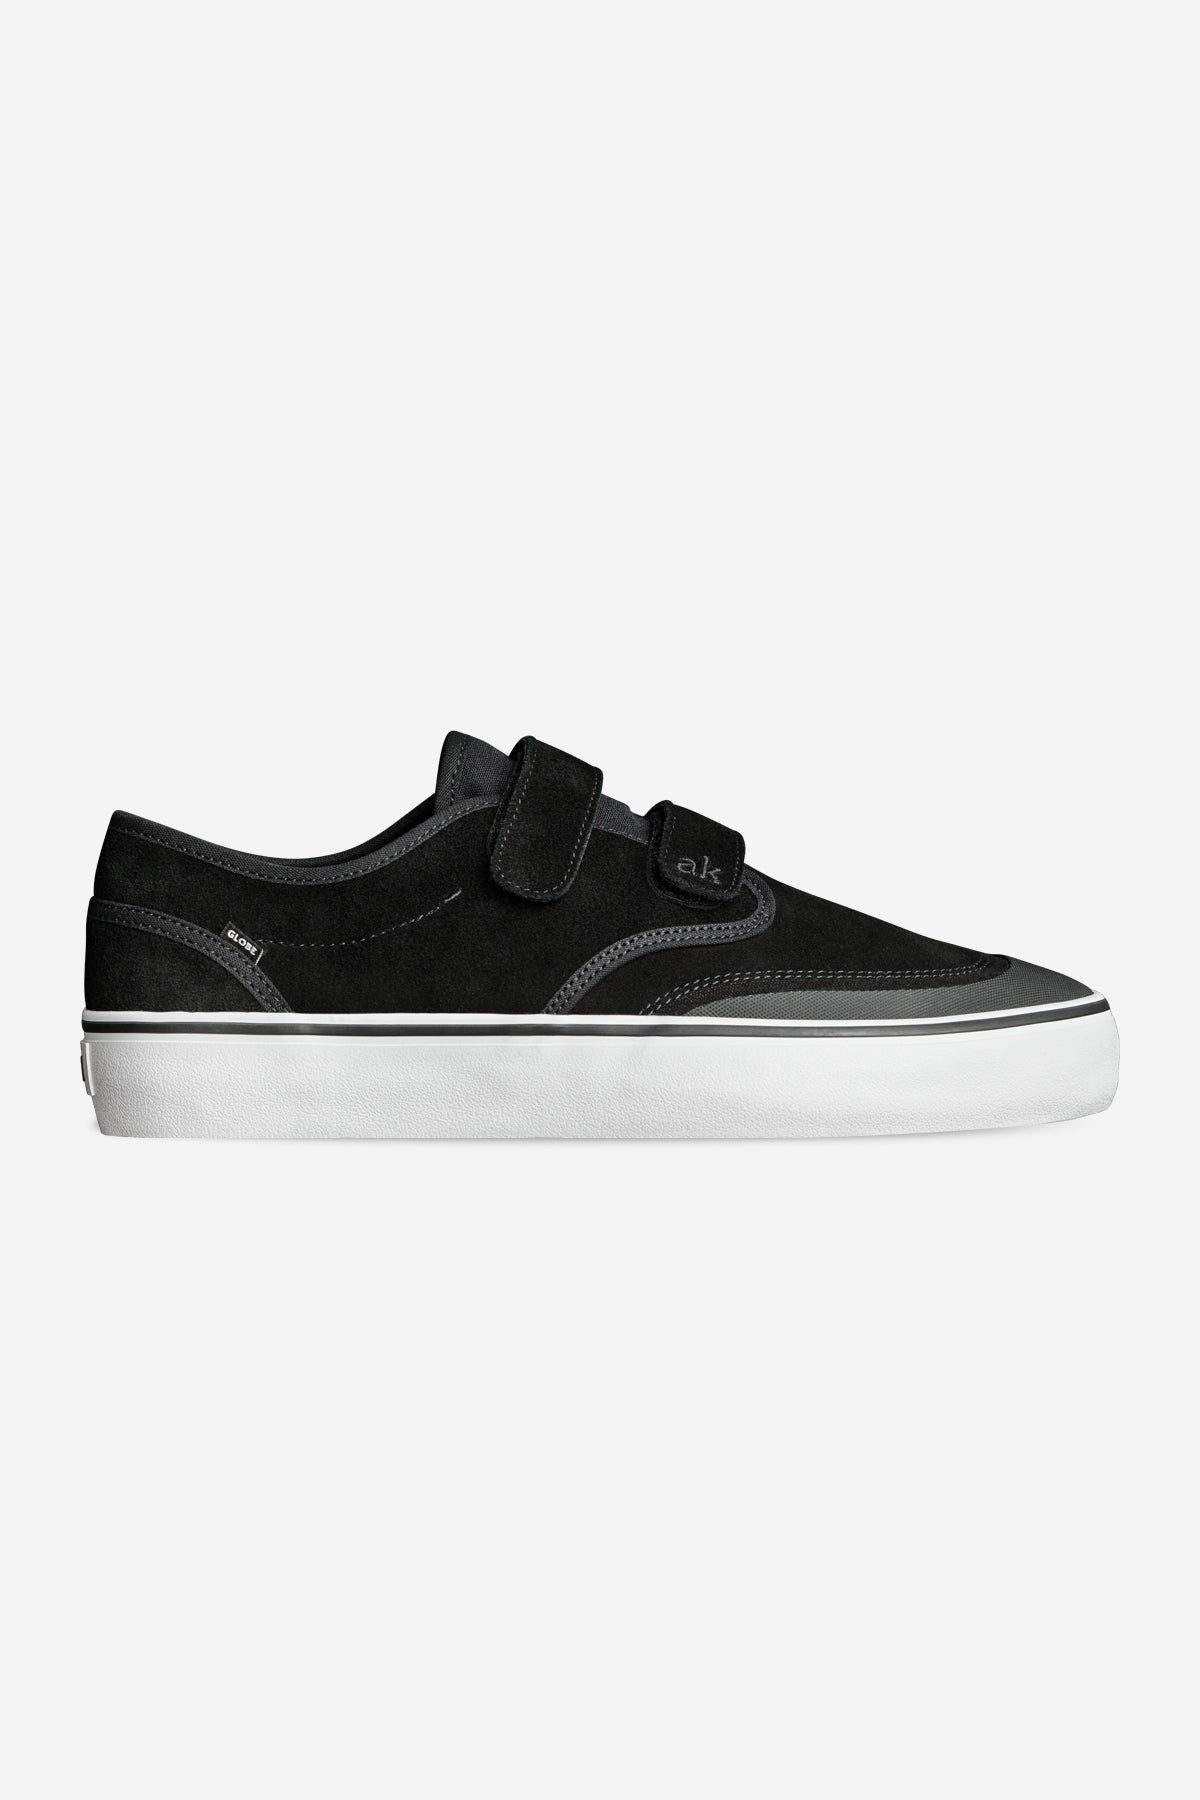 motley ii strap zwart white skateboard  schoenen